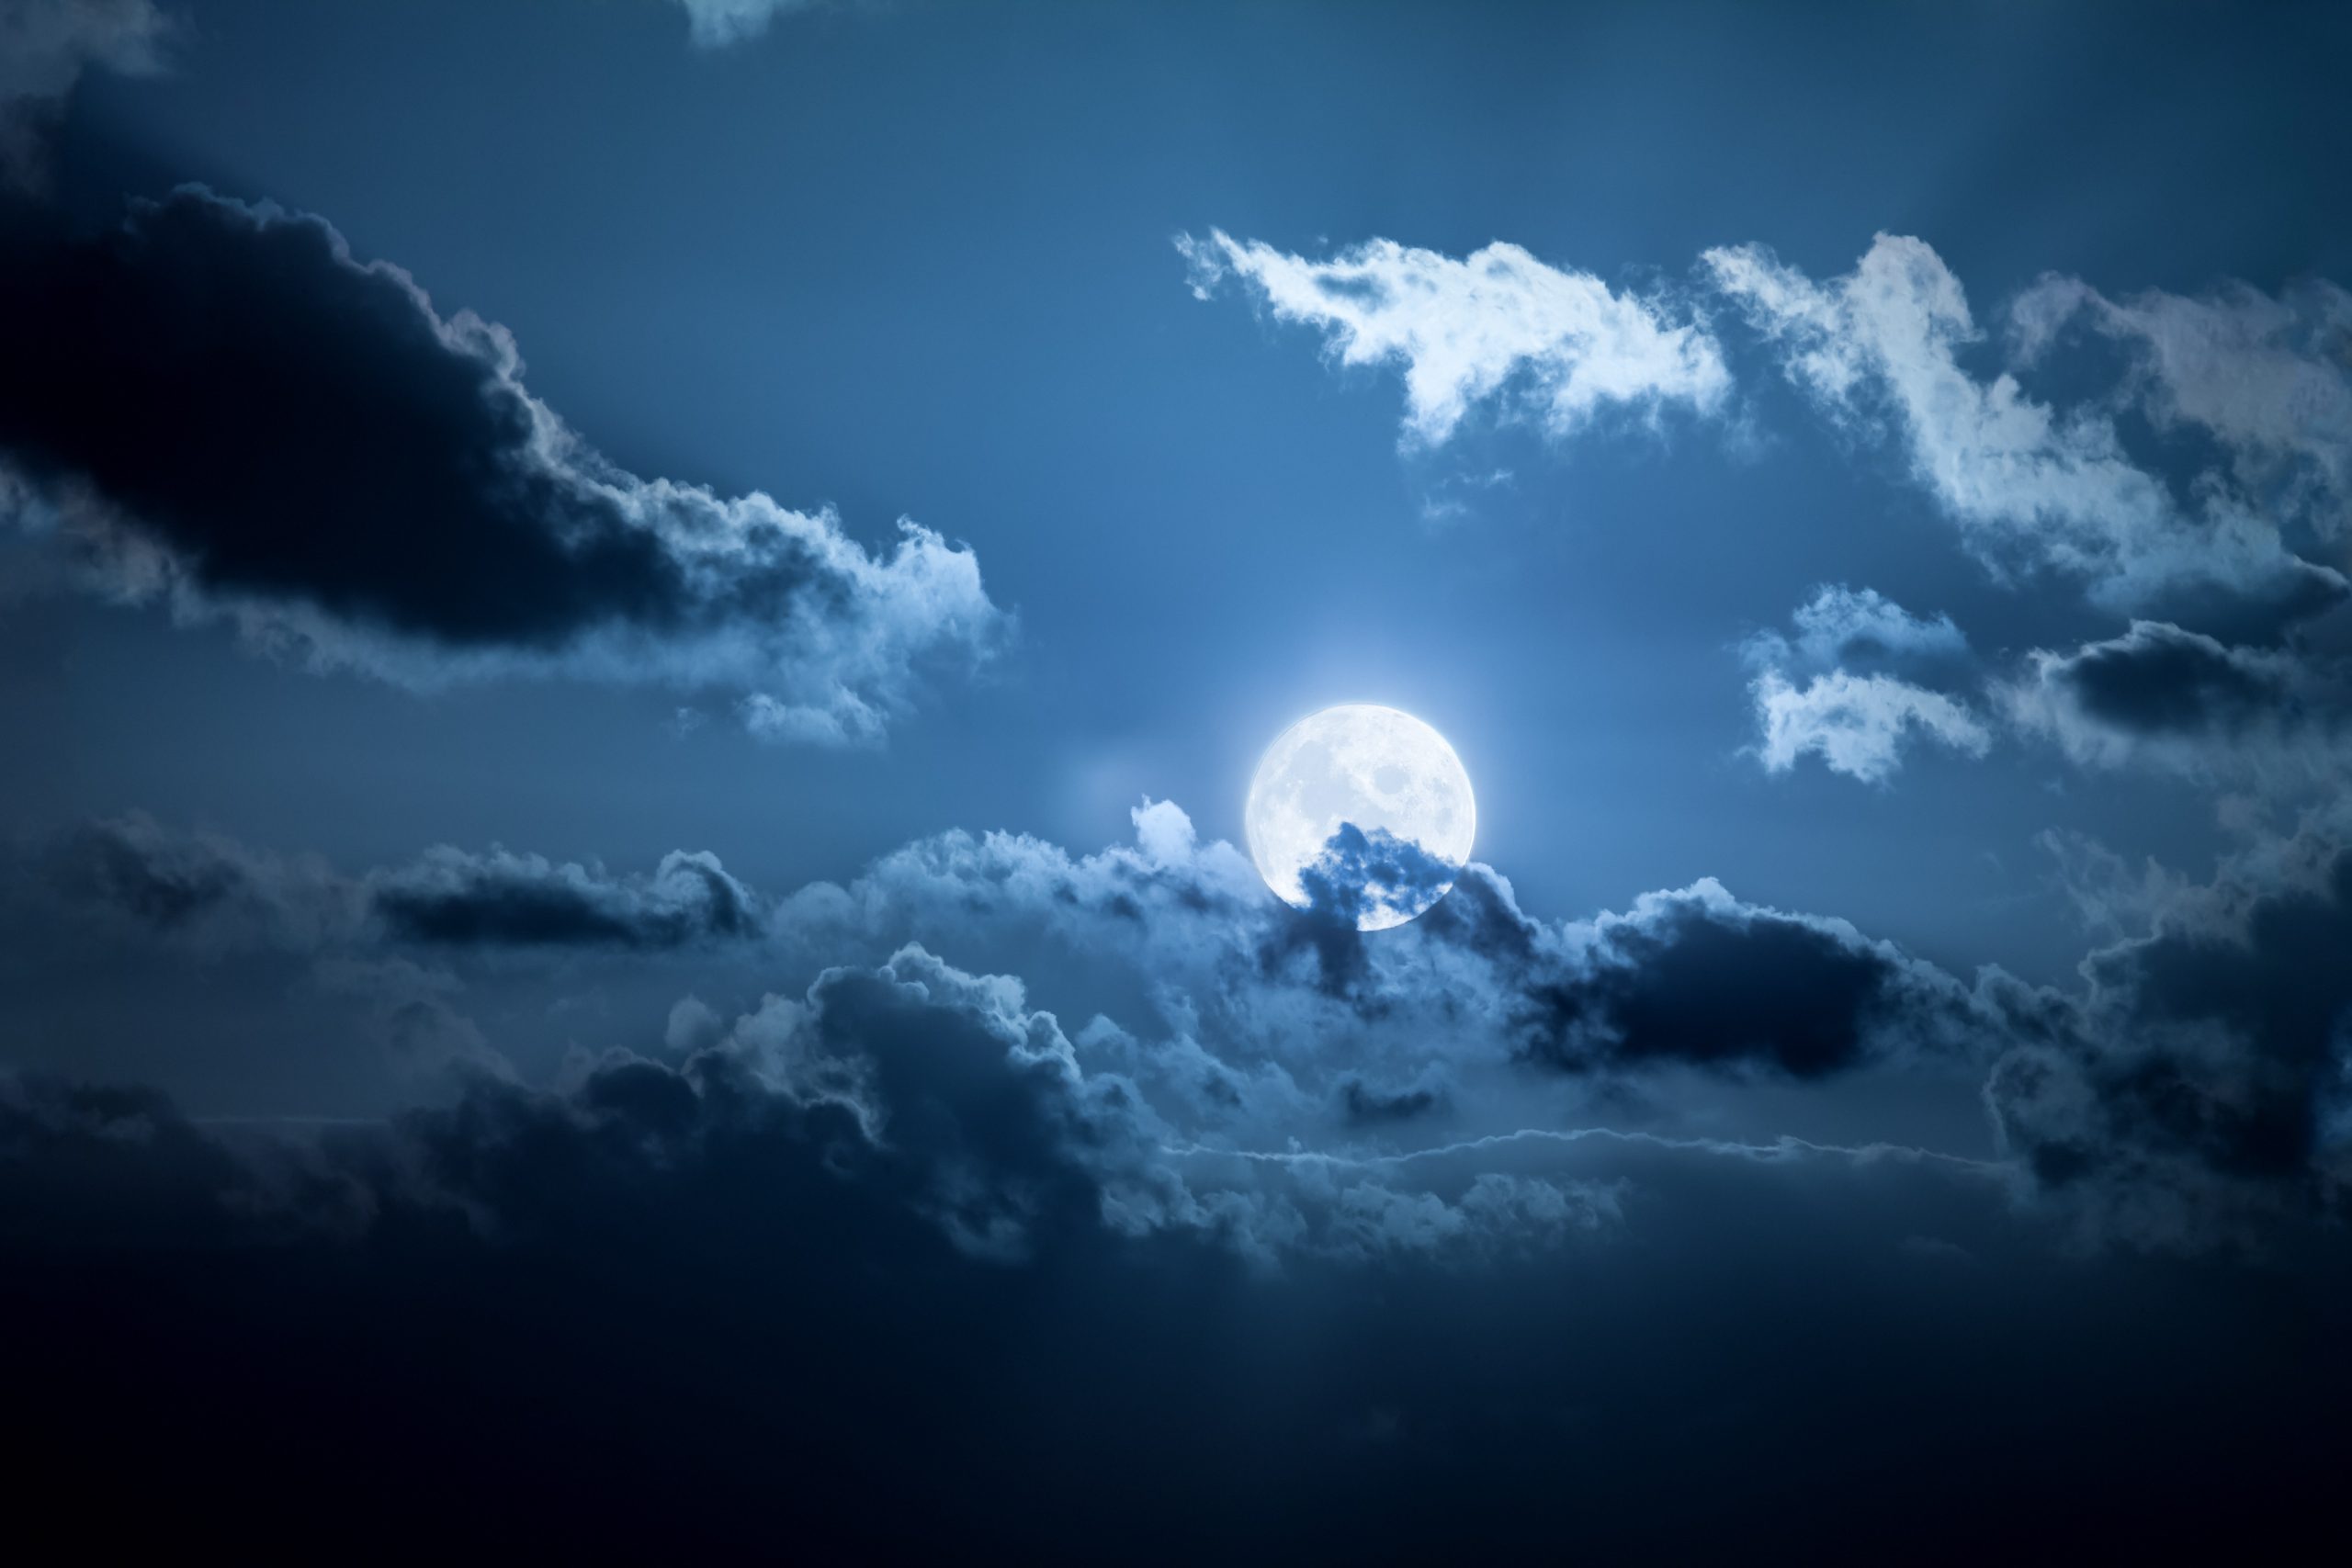 eerie moon through clouds